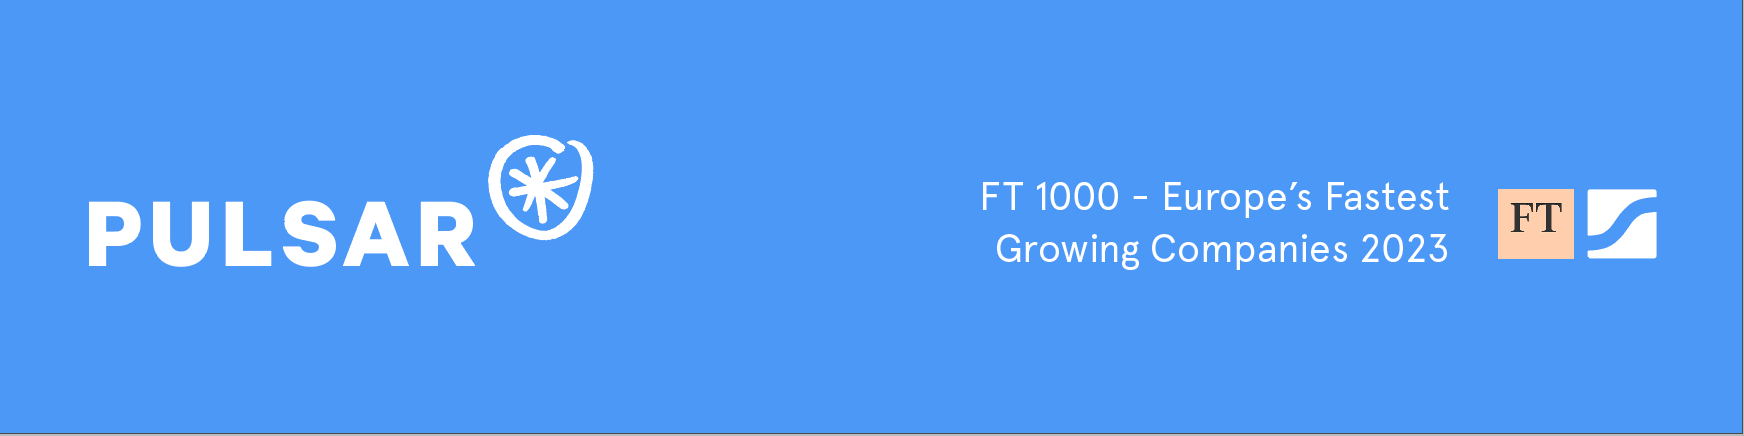 Fincnail Times 1000 Fastest Growing Companies - Pulsar 